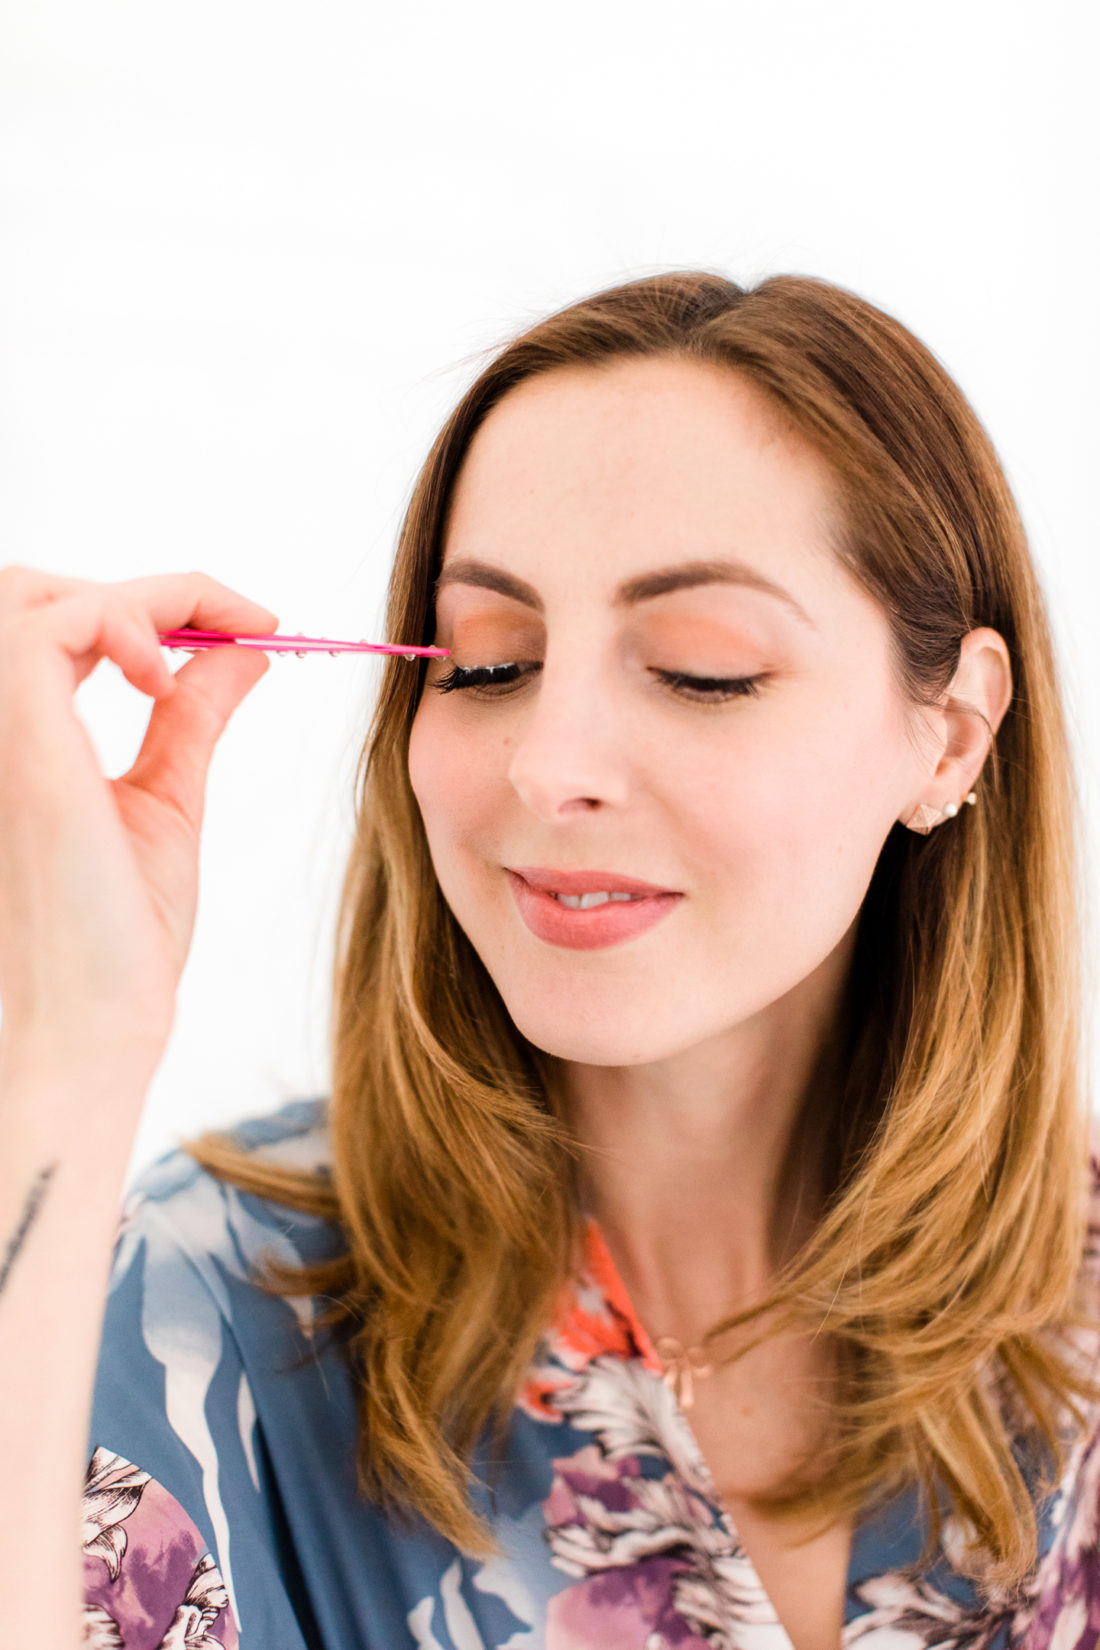 Eva Amurri Martino applies falsh eyelashes as part of her photo shoot makeup tutorial